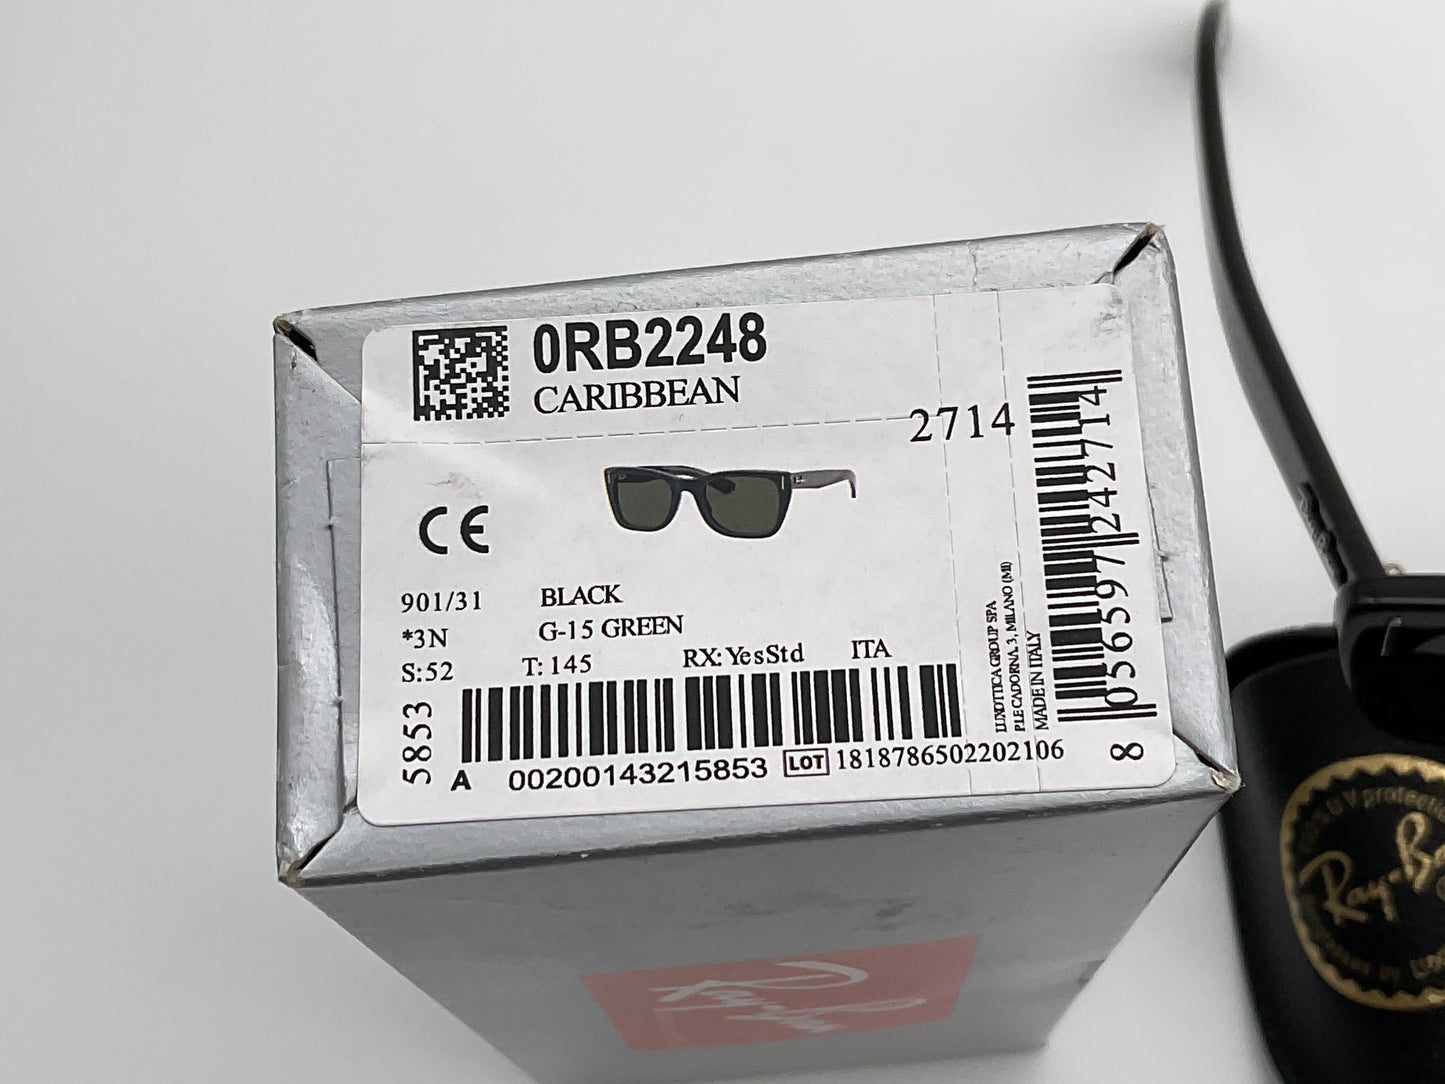 Ray Ban Caribbean 52mm Black G-15 Green Sunglasses RB2248 901/31